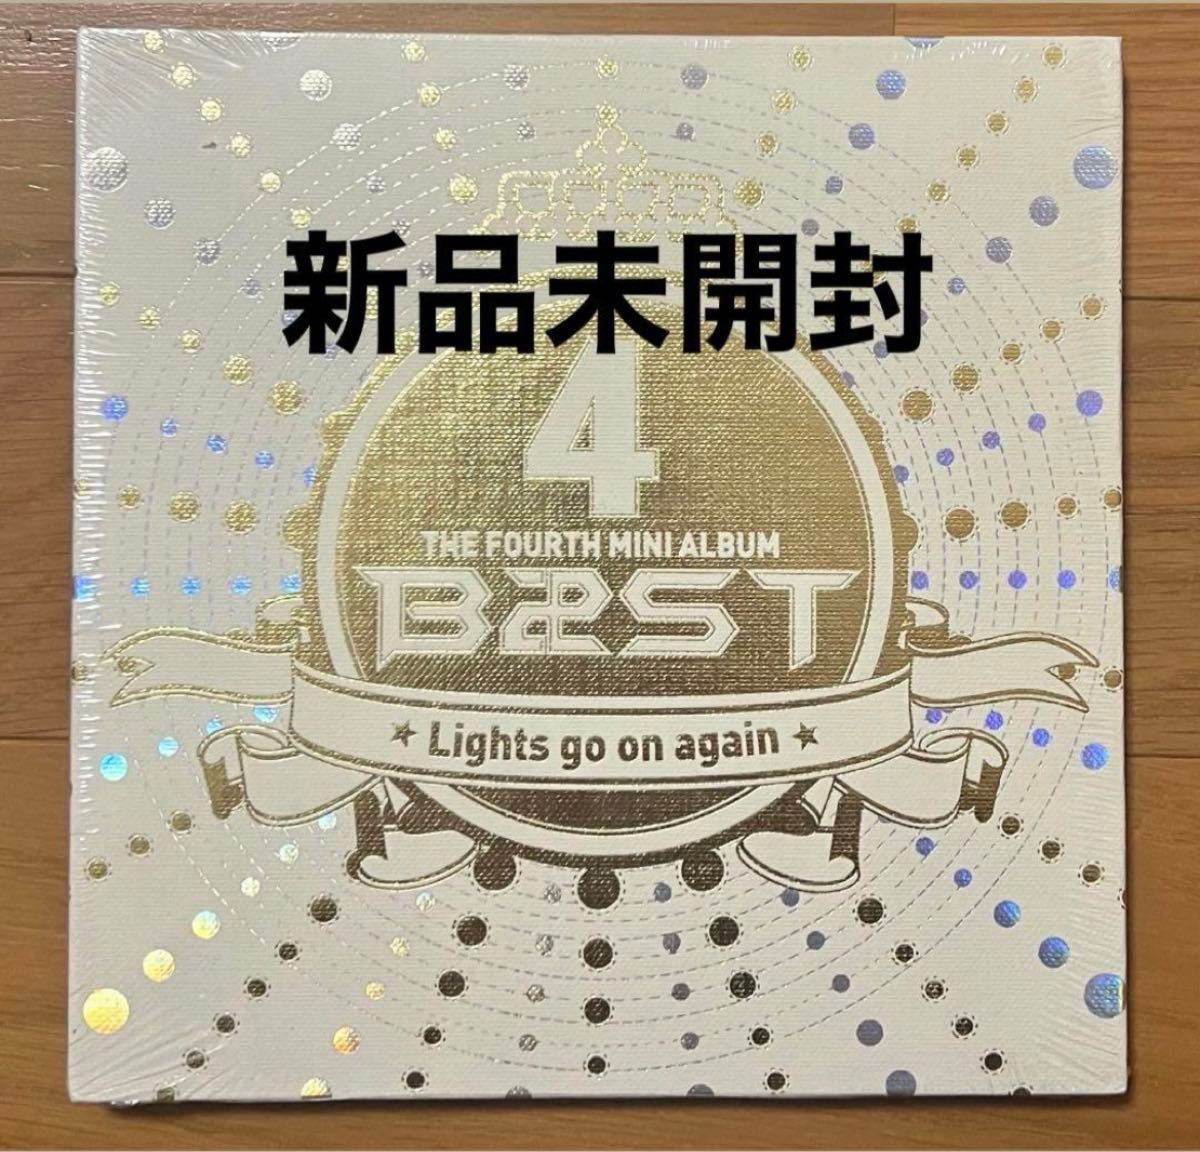 b2st ビースト　アルバム　the fourth mini album 未開封